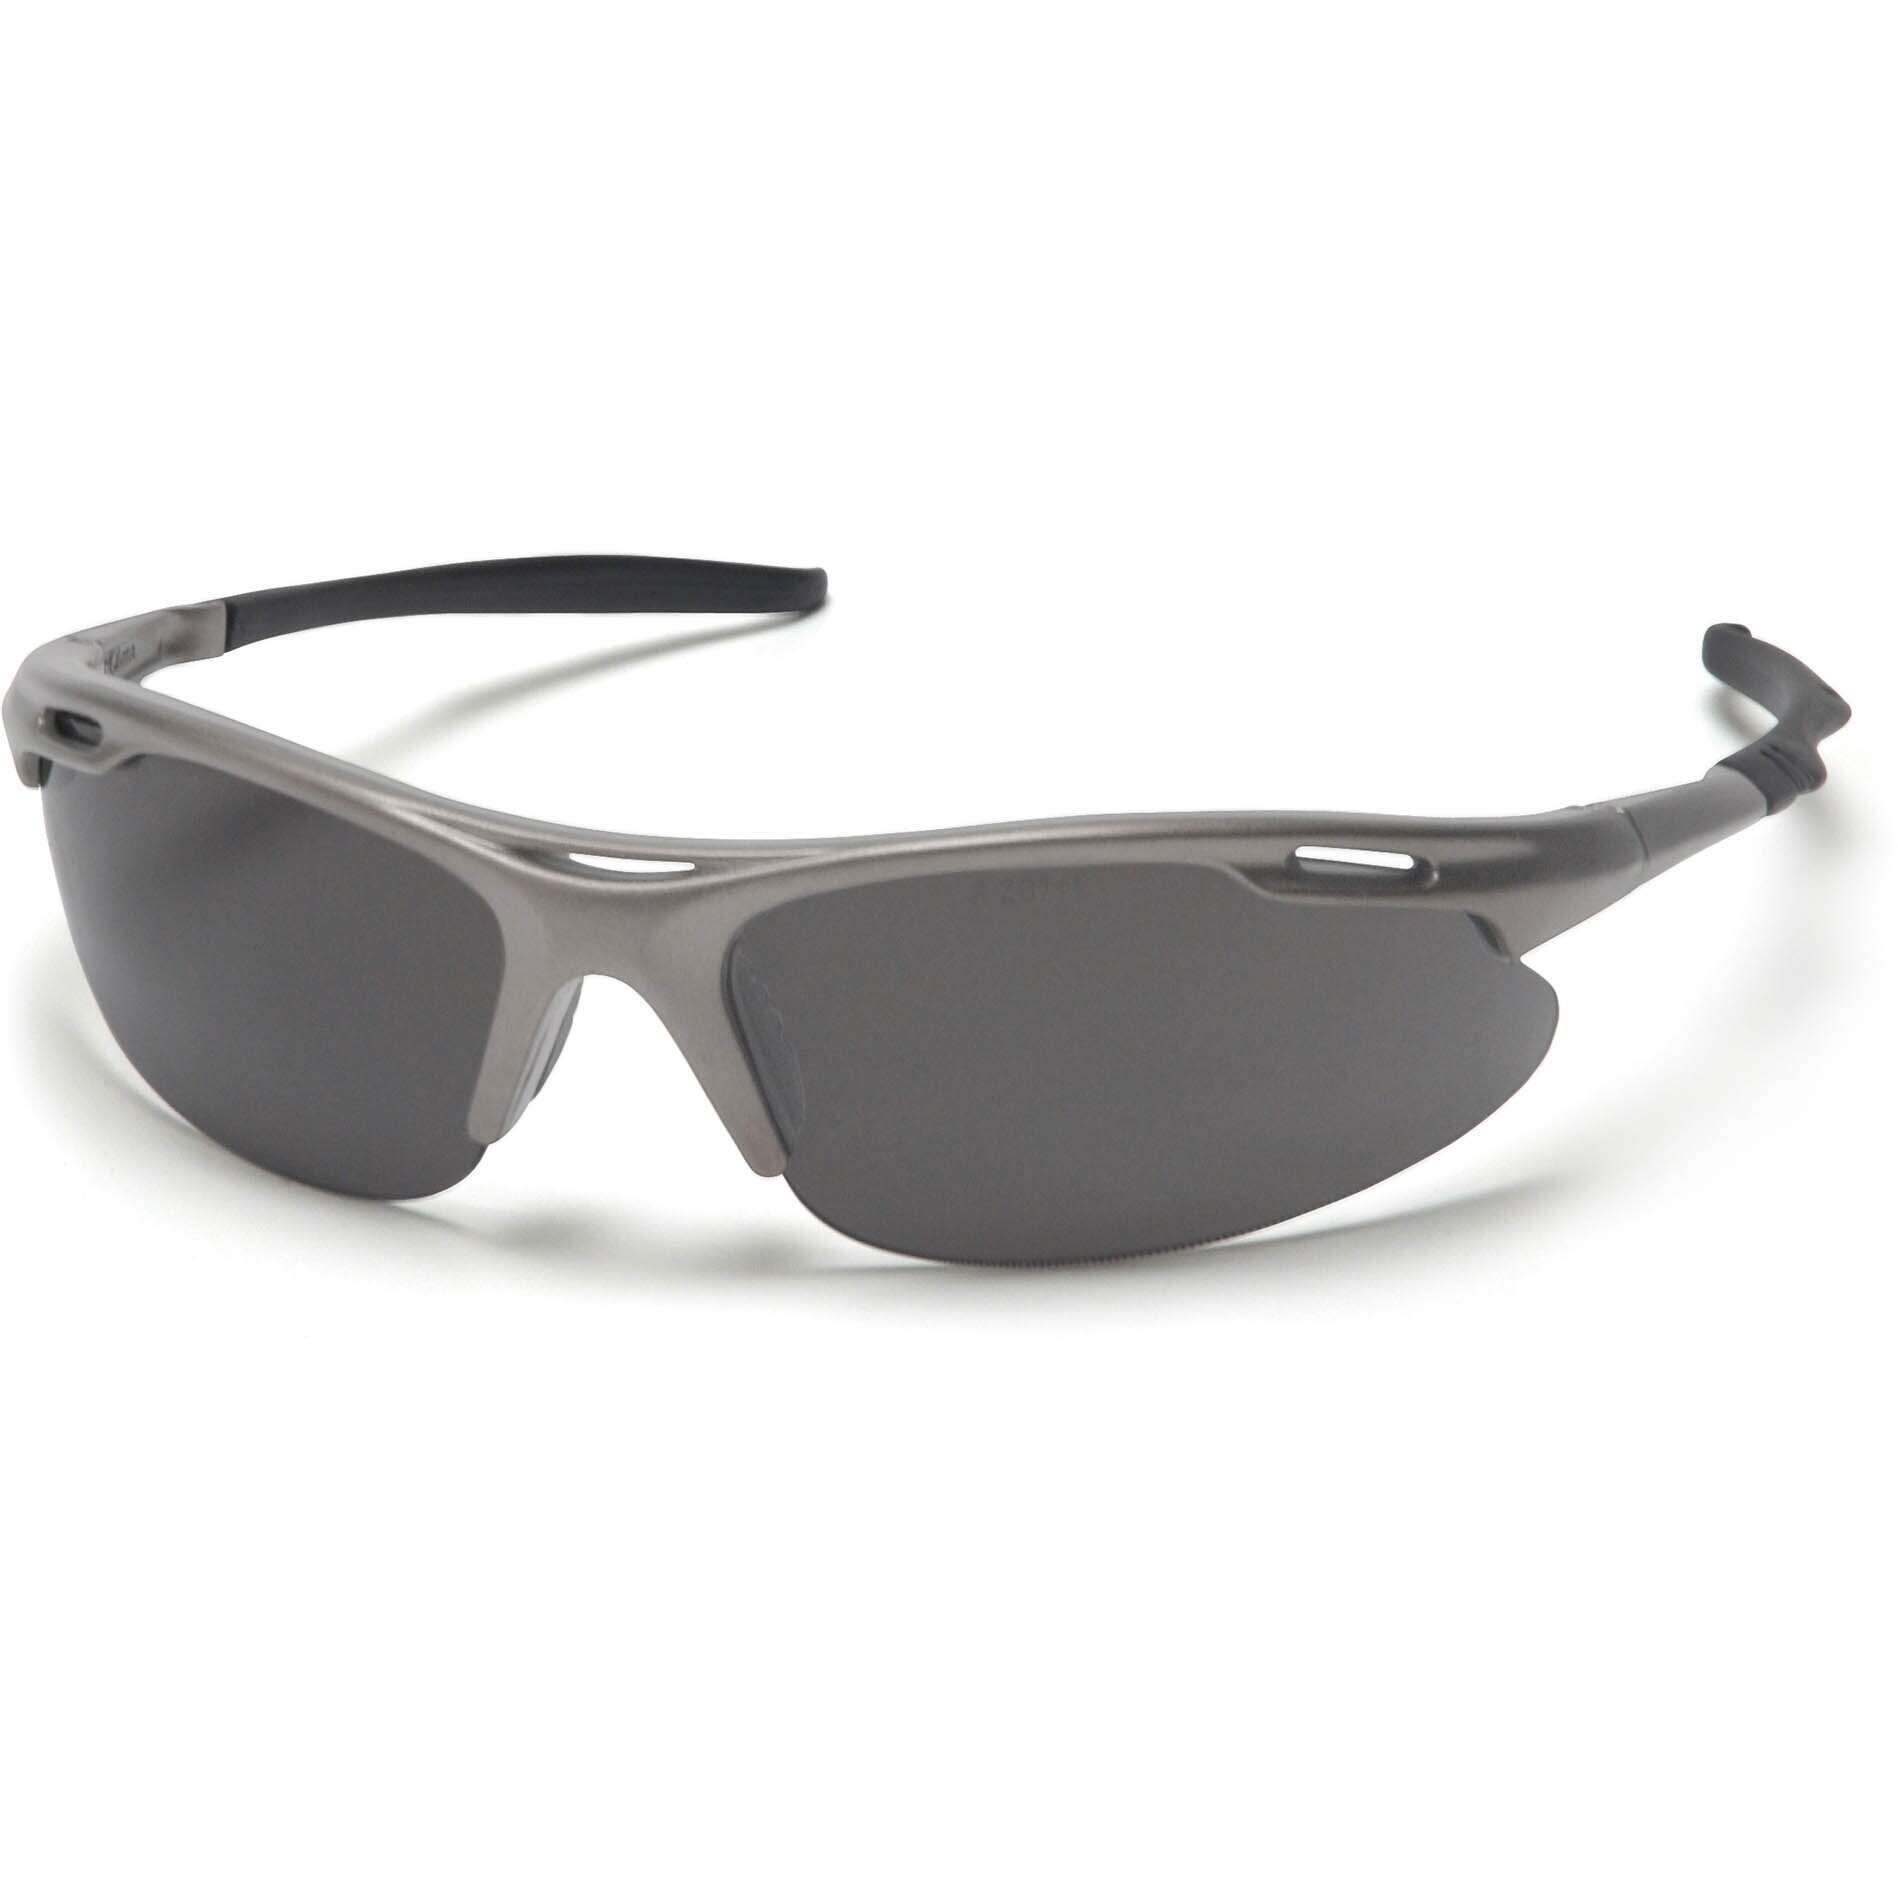 Pyramex® Avante® Safety Glasses, Gunmetal Frame, Gray Lens